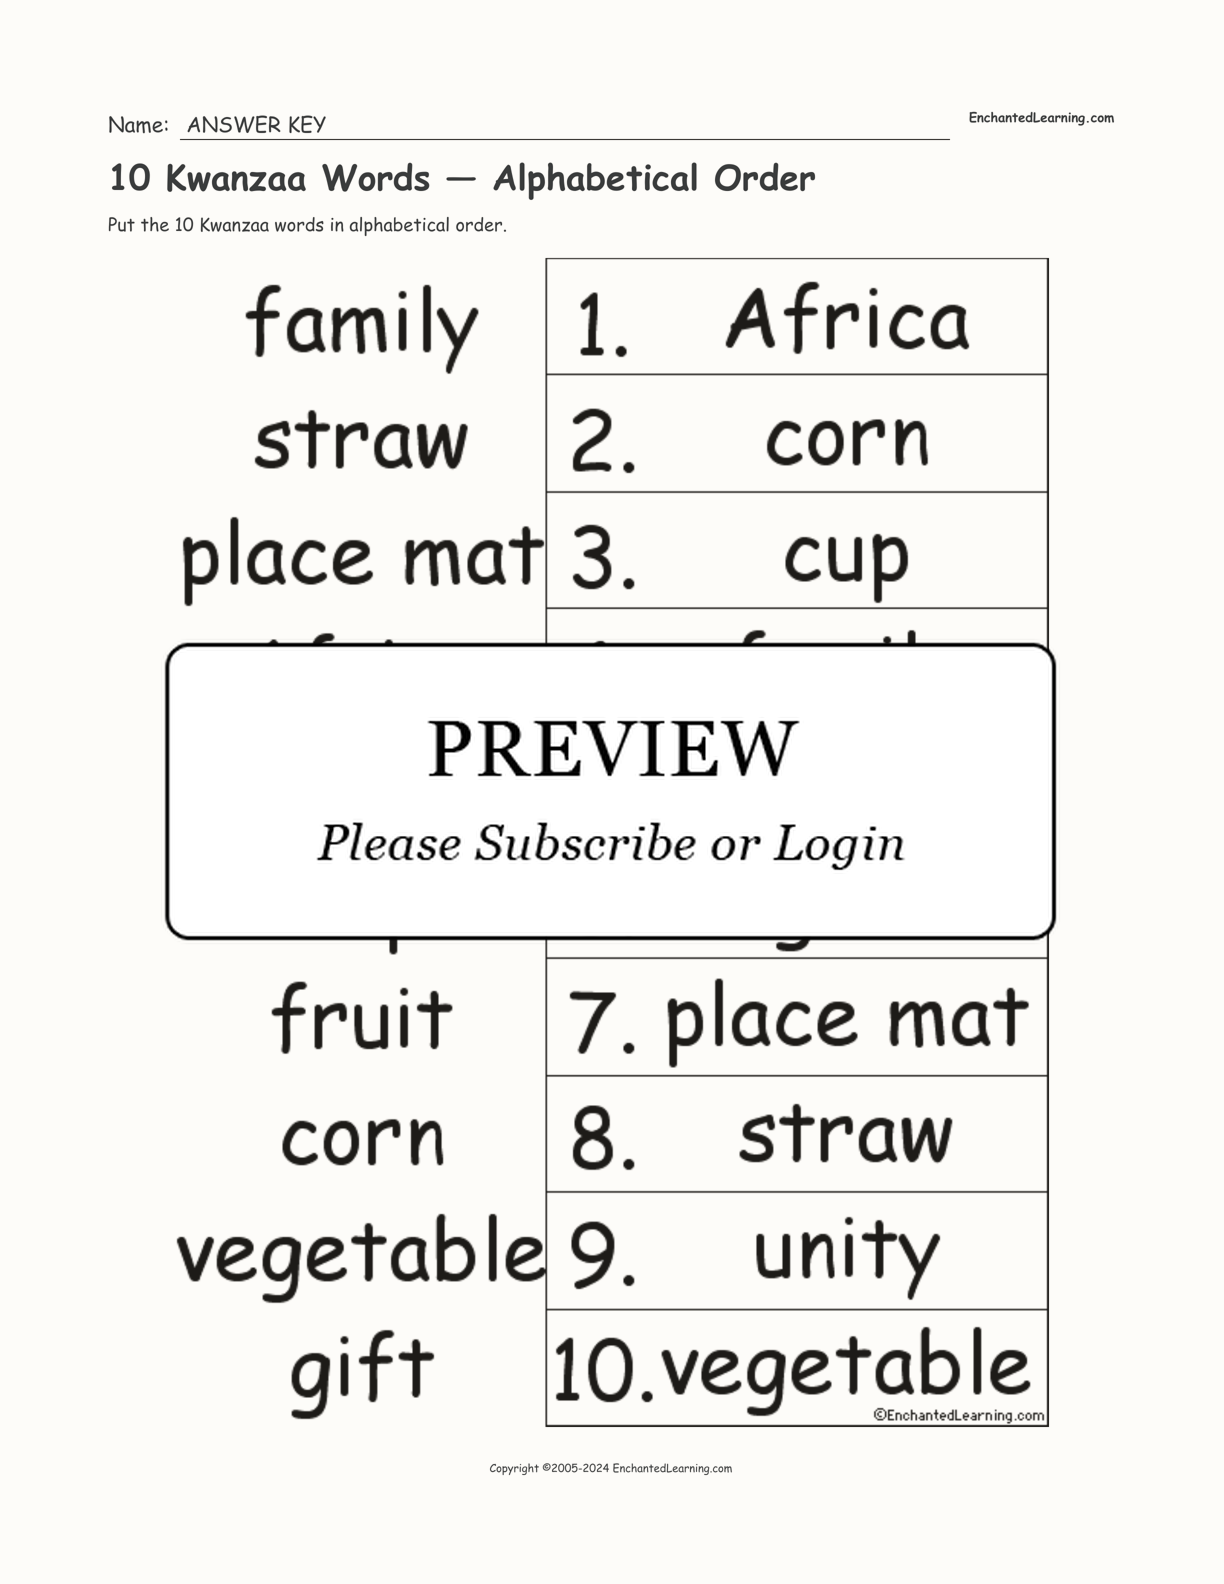 10 Kwanzaa Words — Alphabetical Order interactive worksheet page 2